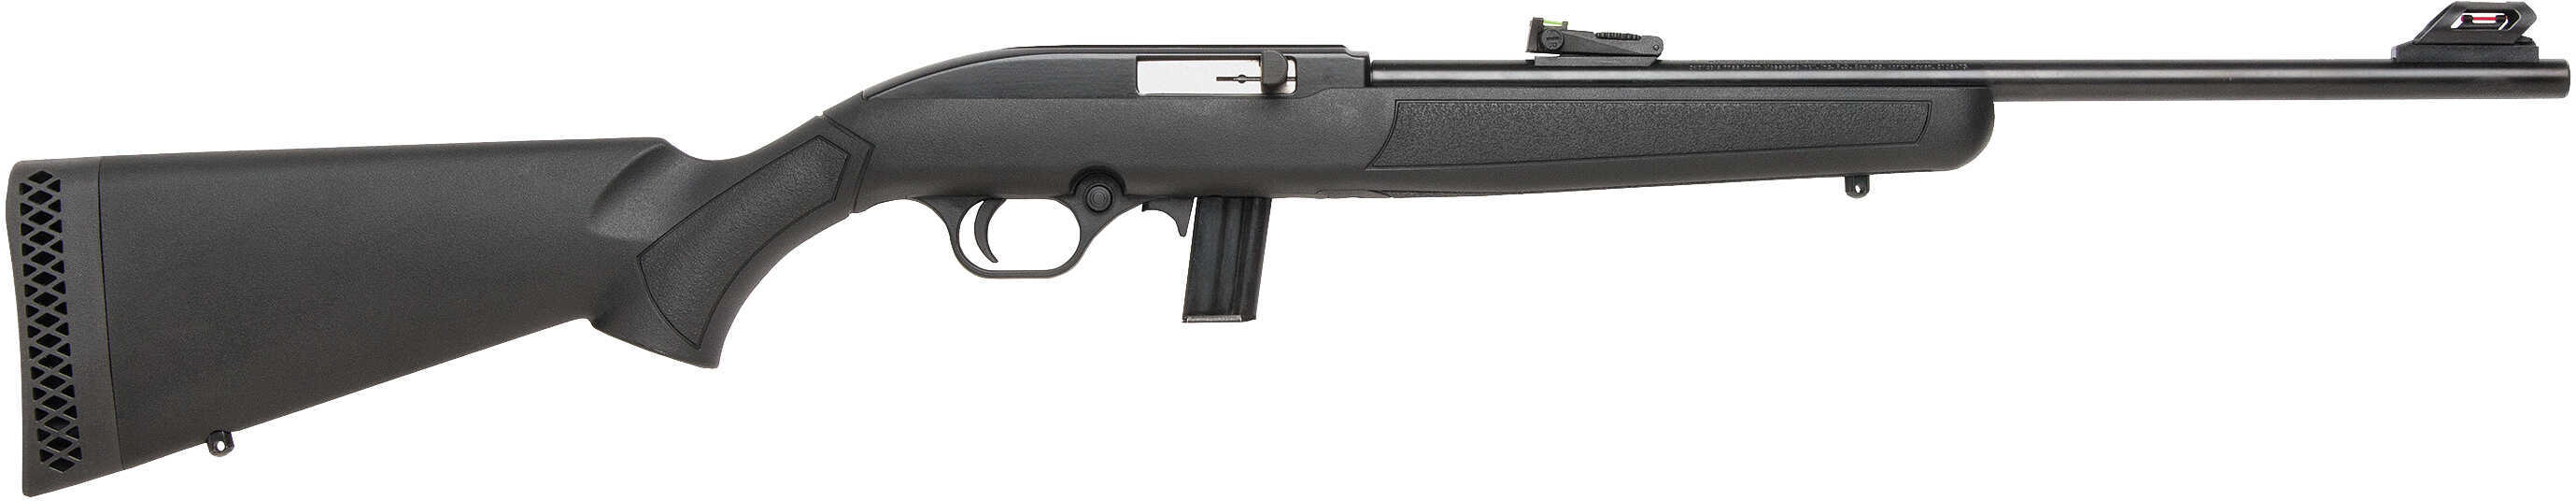 Mossberg 702 Plinkster Rifle 22 LR 18" Barrel Fiber Optic Sight 10 Round Blued Finish Black Synthetic Stock